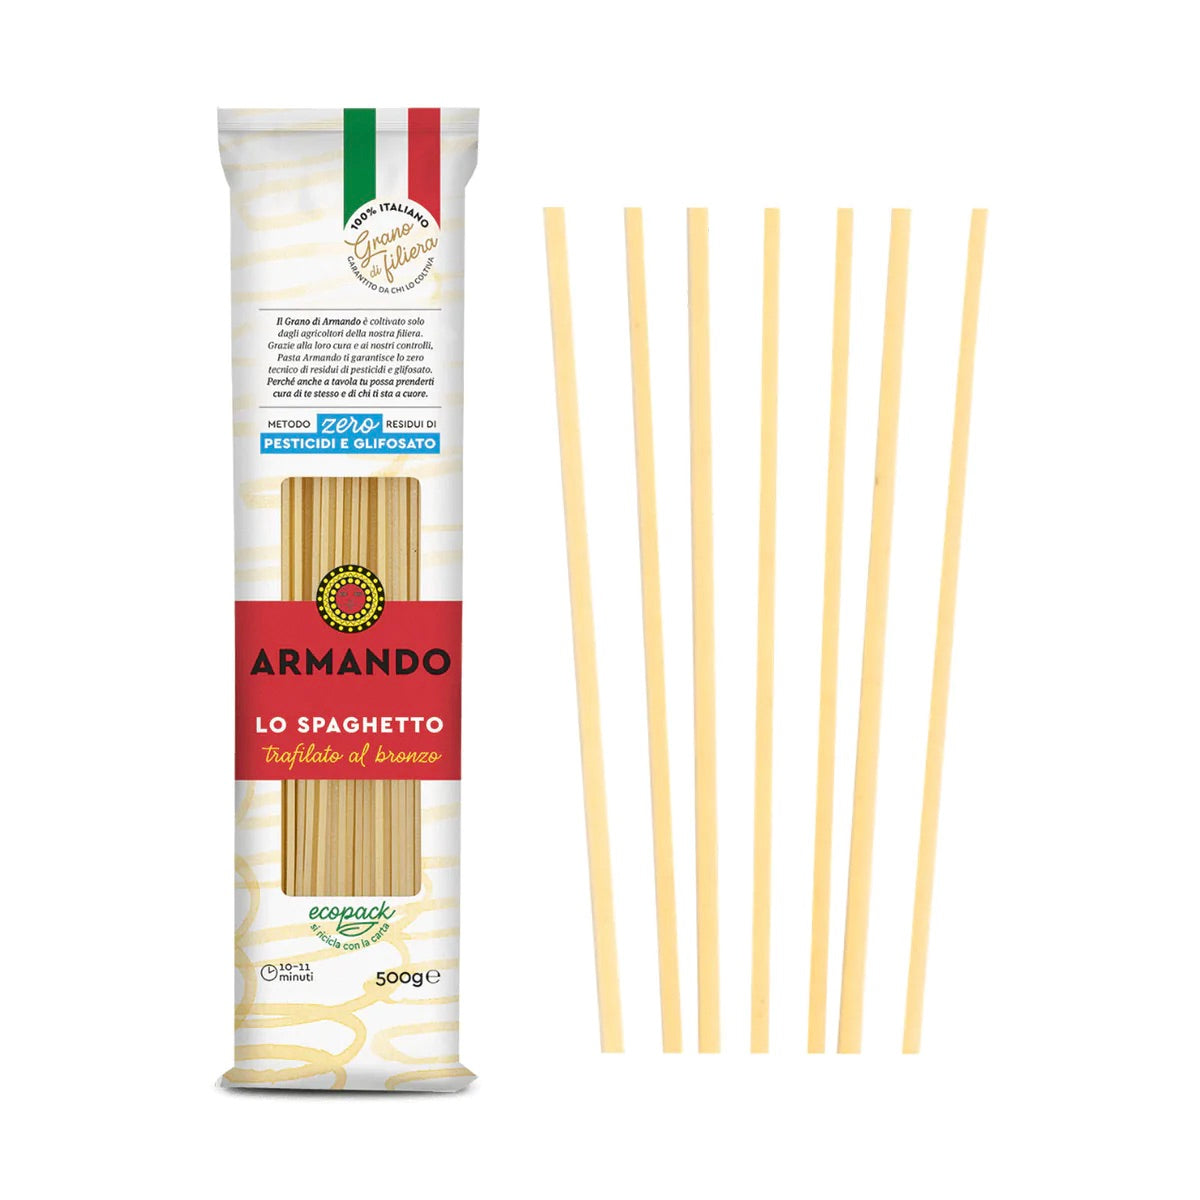 Spaghetti Chitarra | ARMANDO BRONZE DIE PASTA | 2x500g